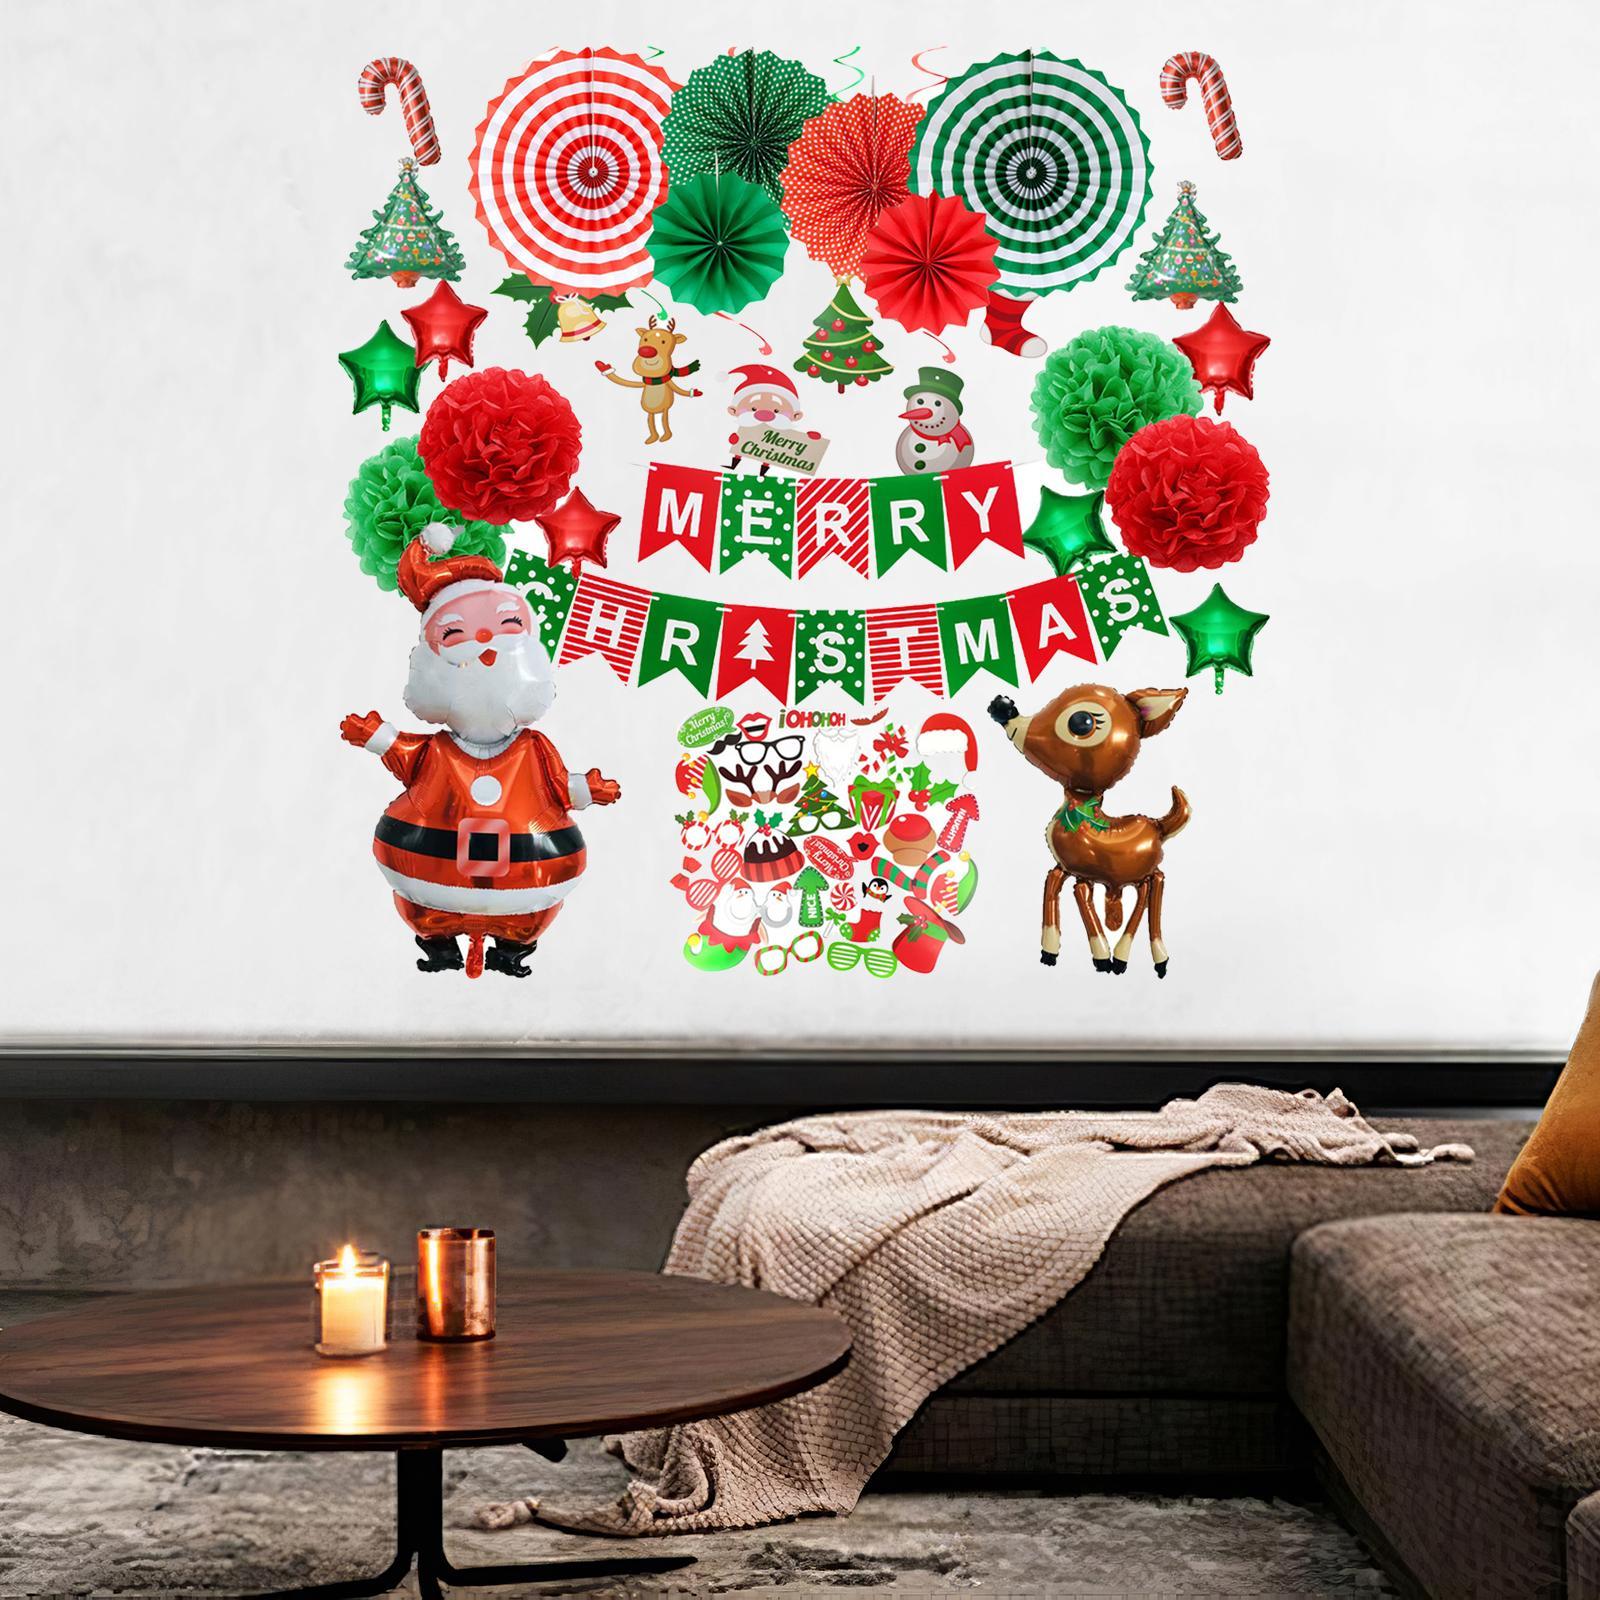 Christmas Colorful Paper Fans  Decorations Hanging Decor Set 1